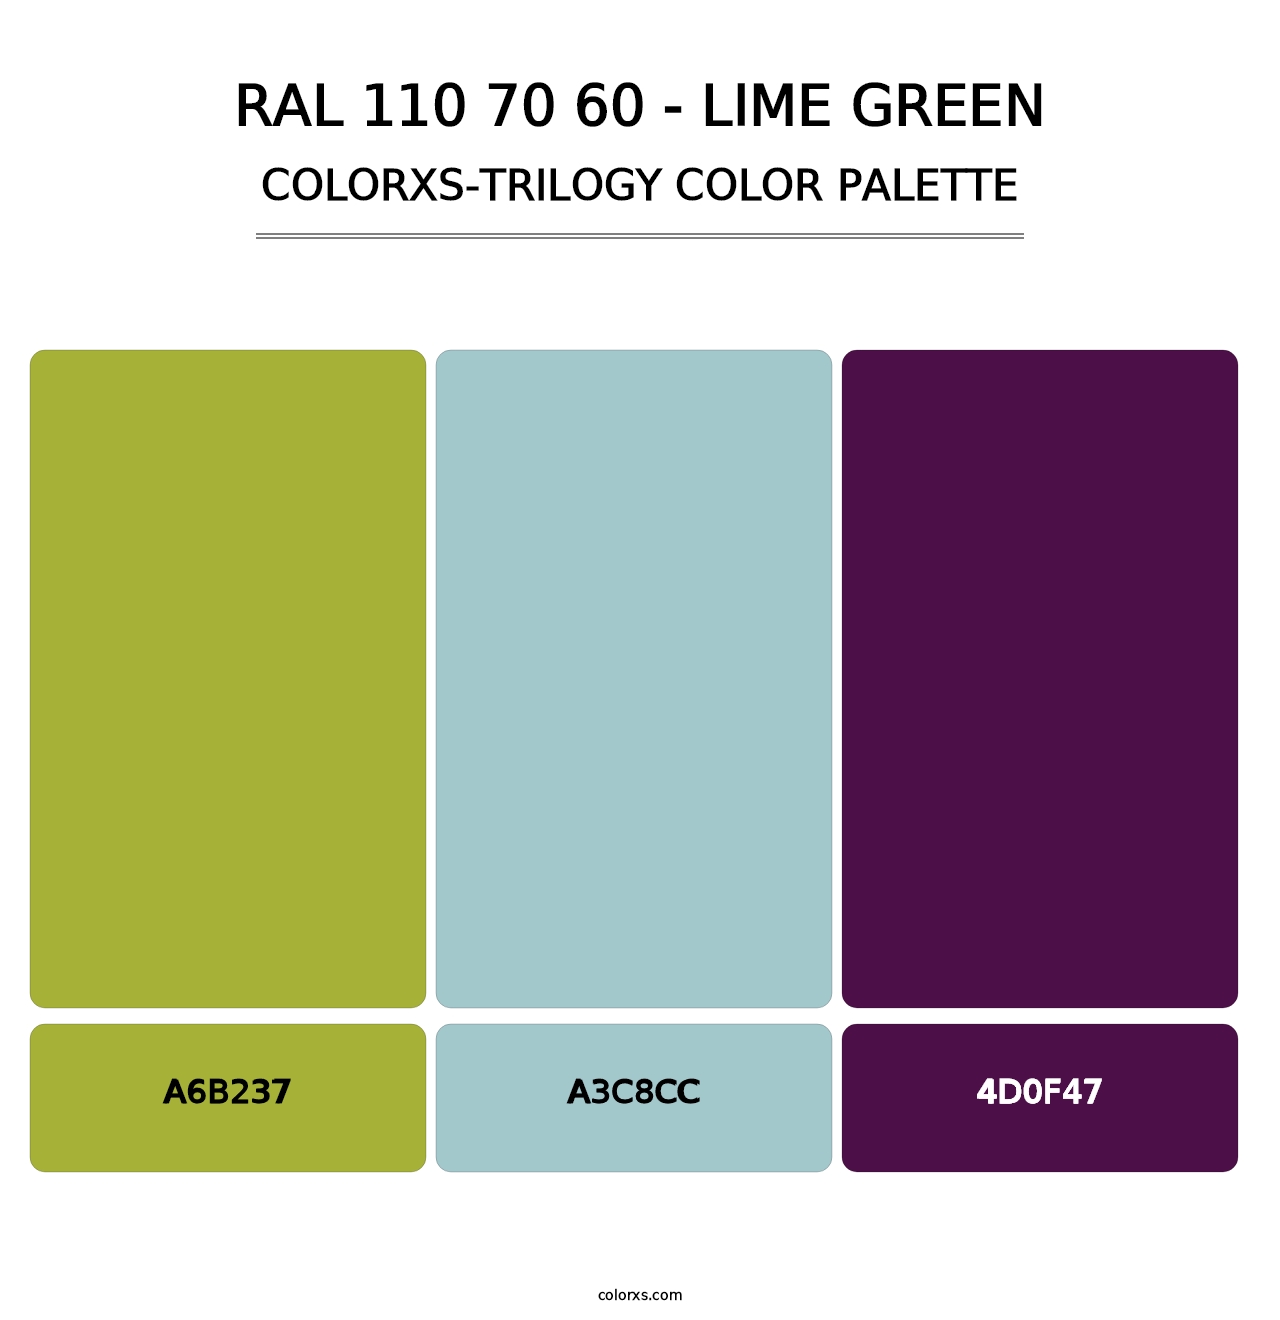 RAL 110 70 60 - Lime Green - Colorxs Trilogy Palette